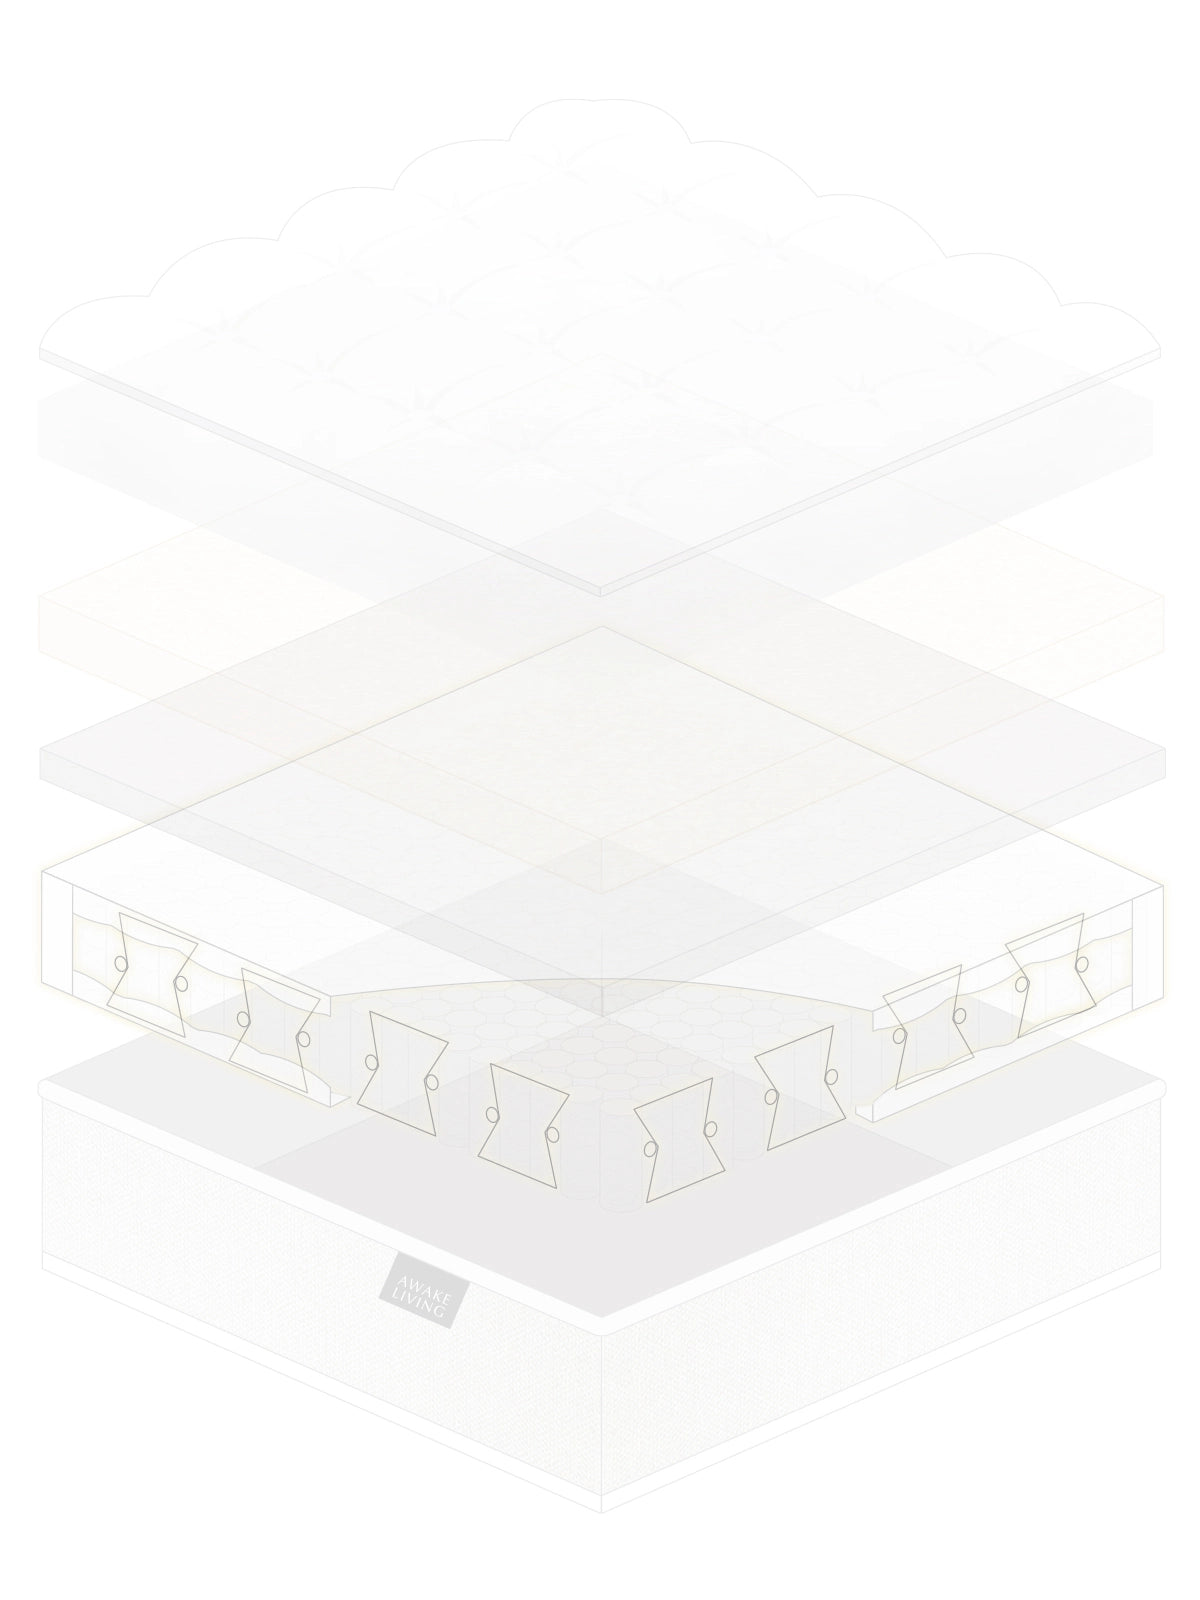 Lite 2.0 輕舒柔眠天絲獨立筒床墊分層圖 - 蝴蝶型輔助彈簧護框結構